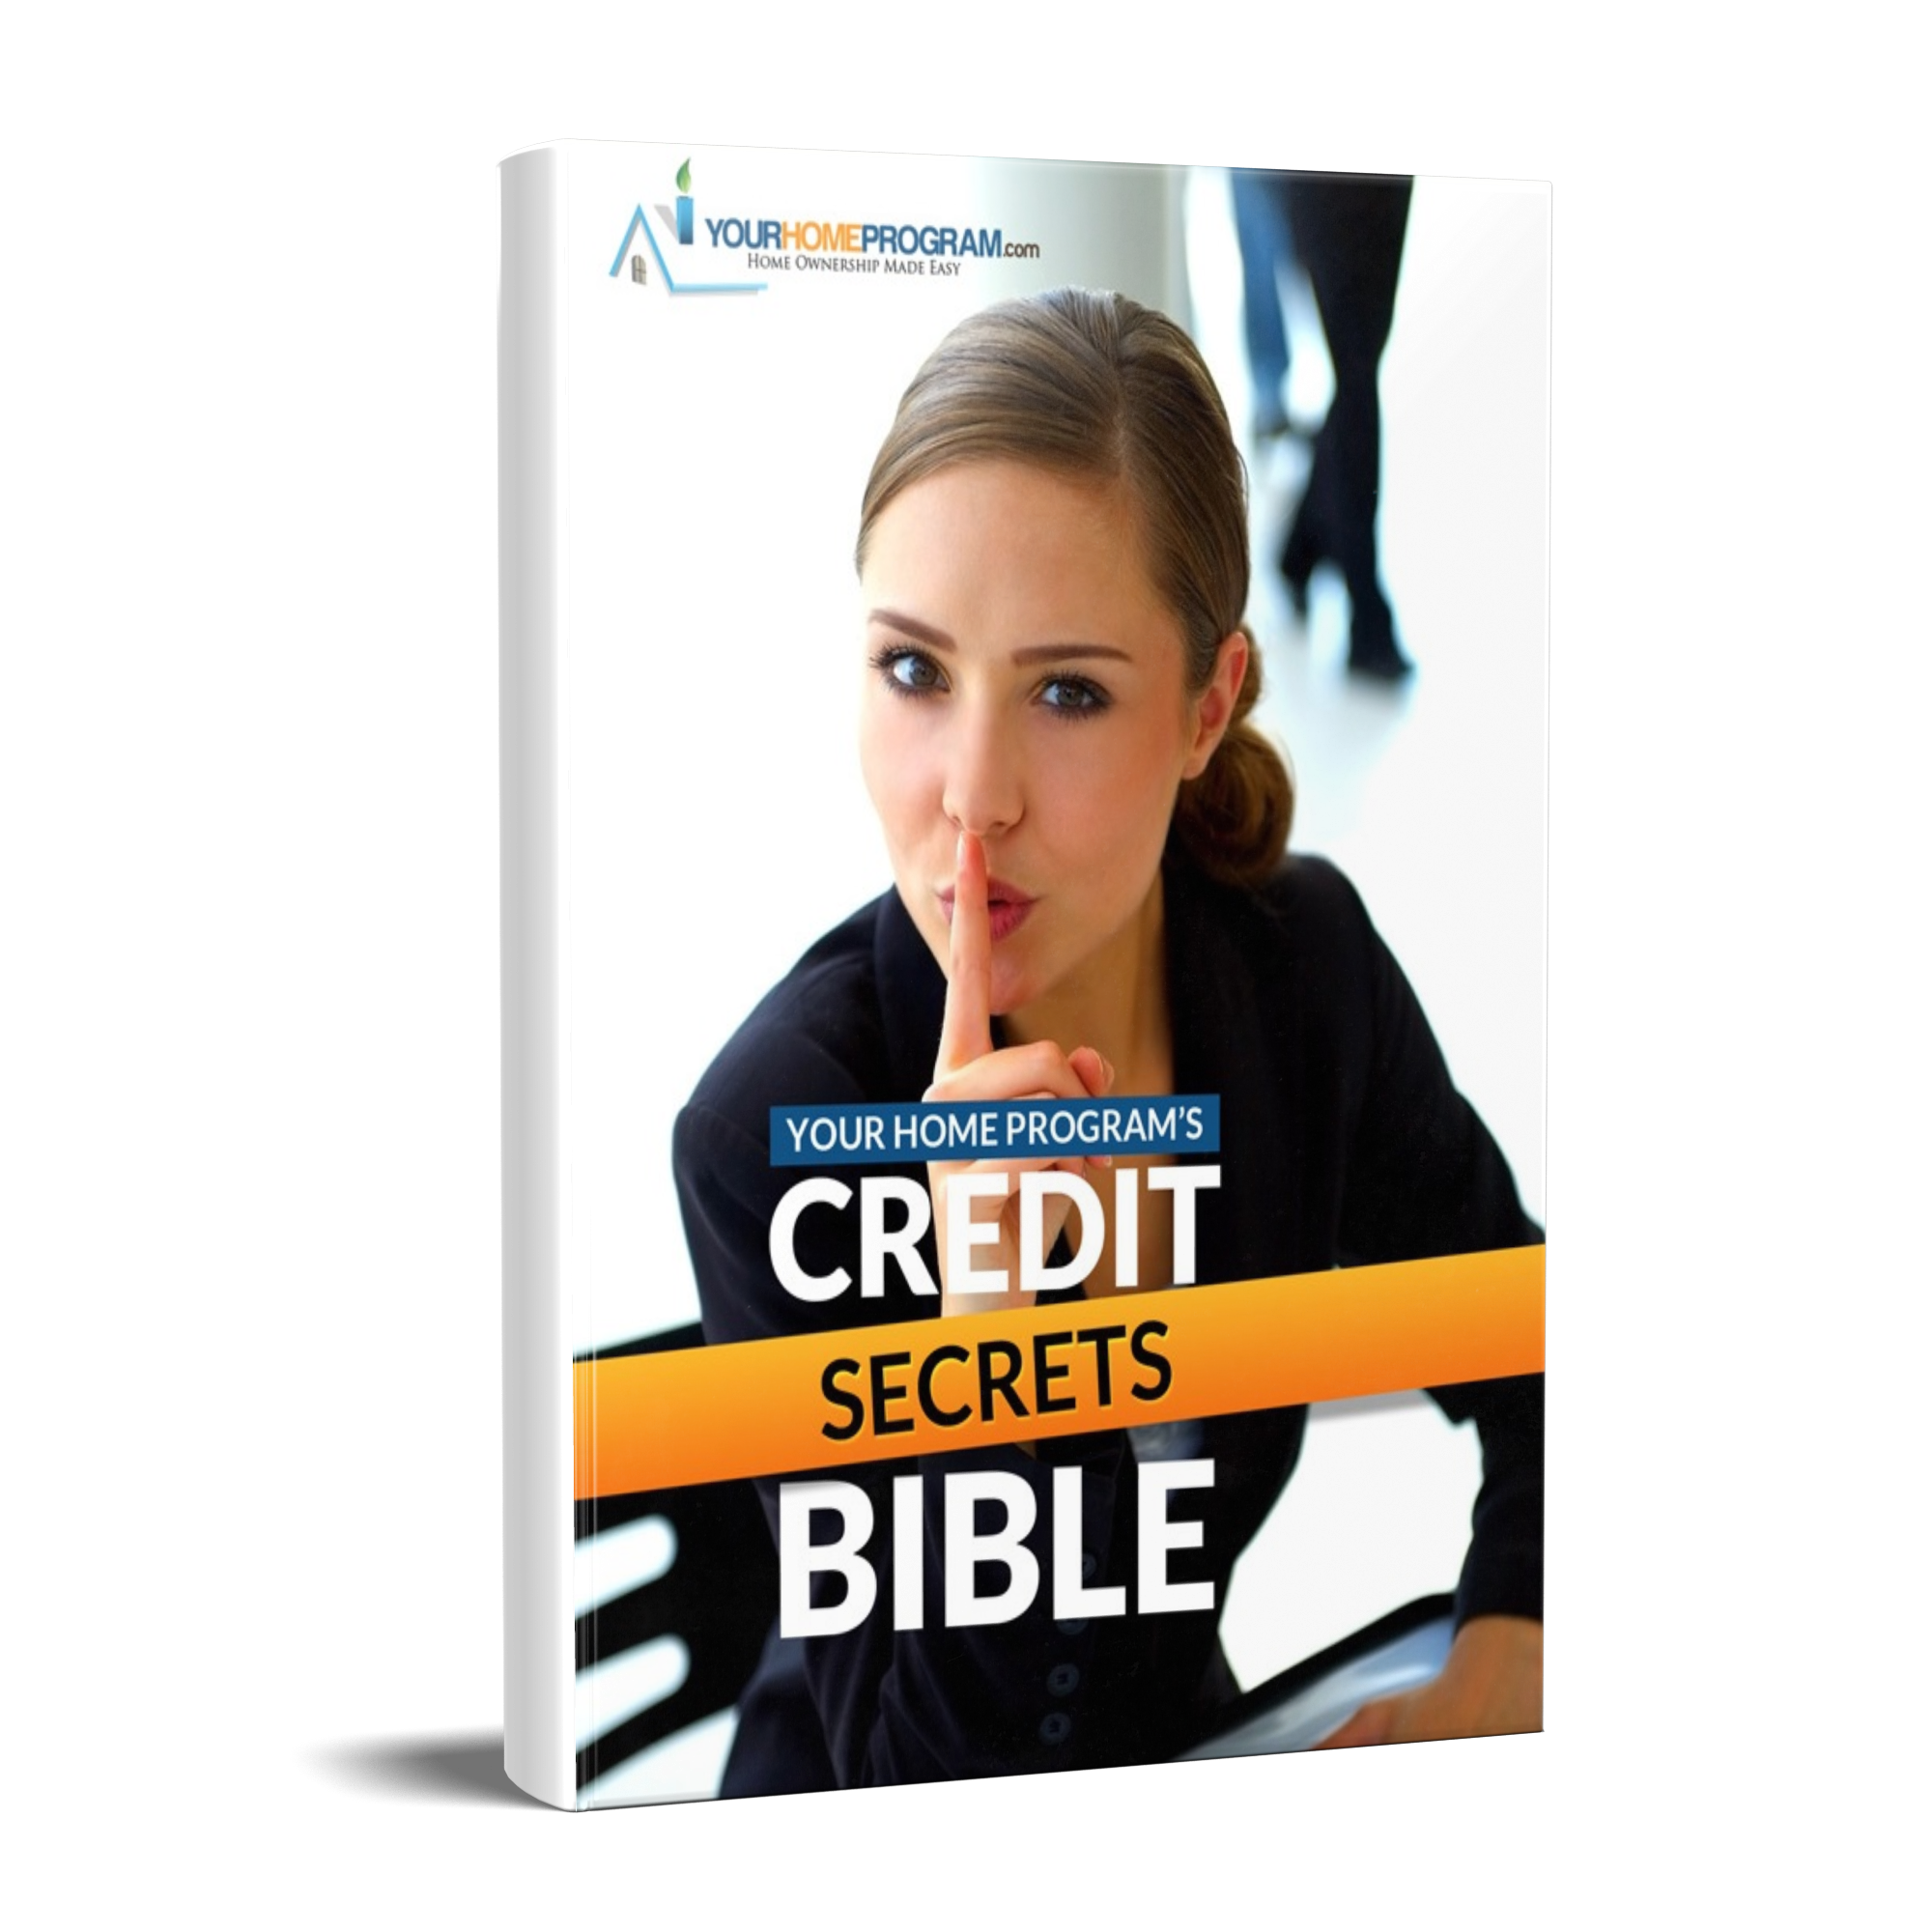 Credit Secrets Bible